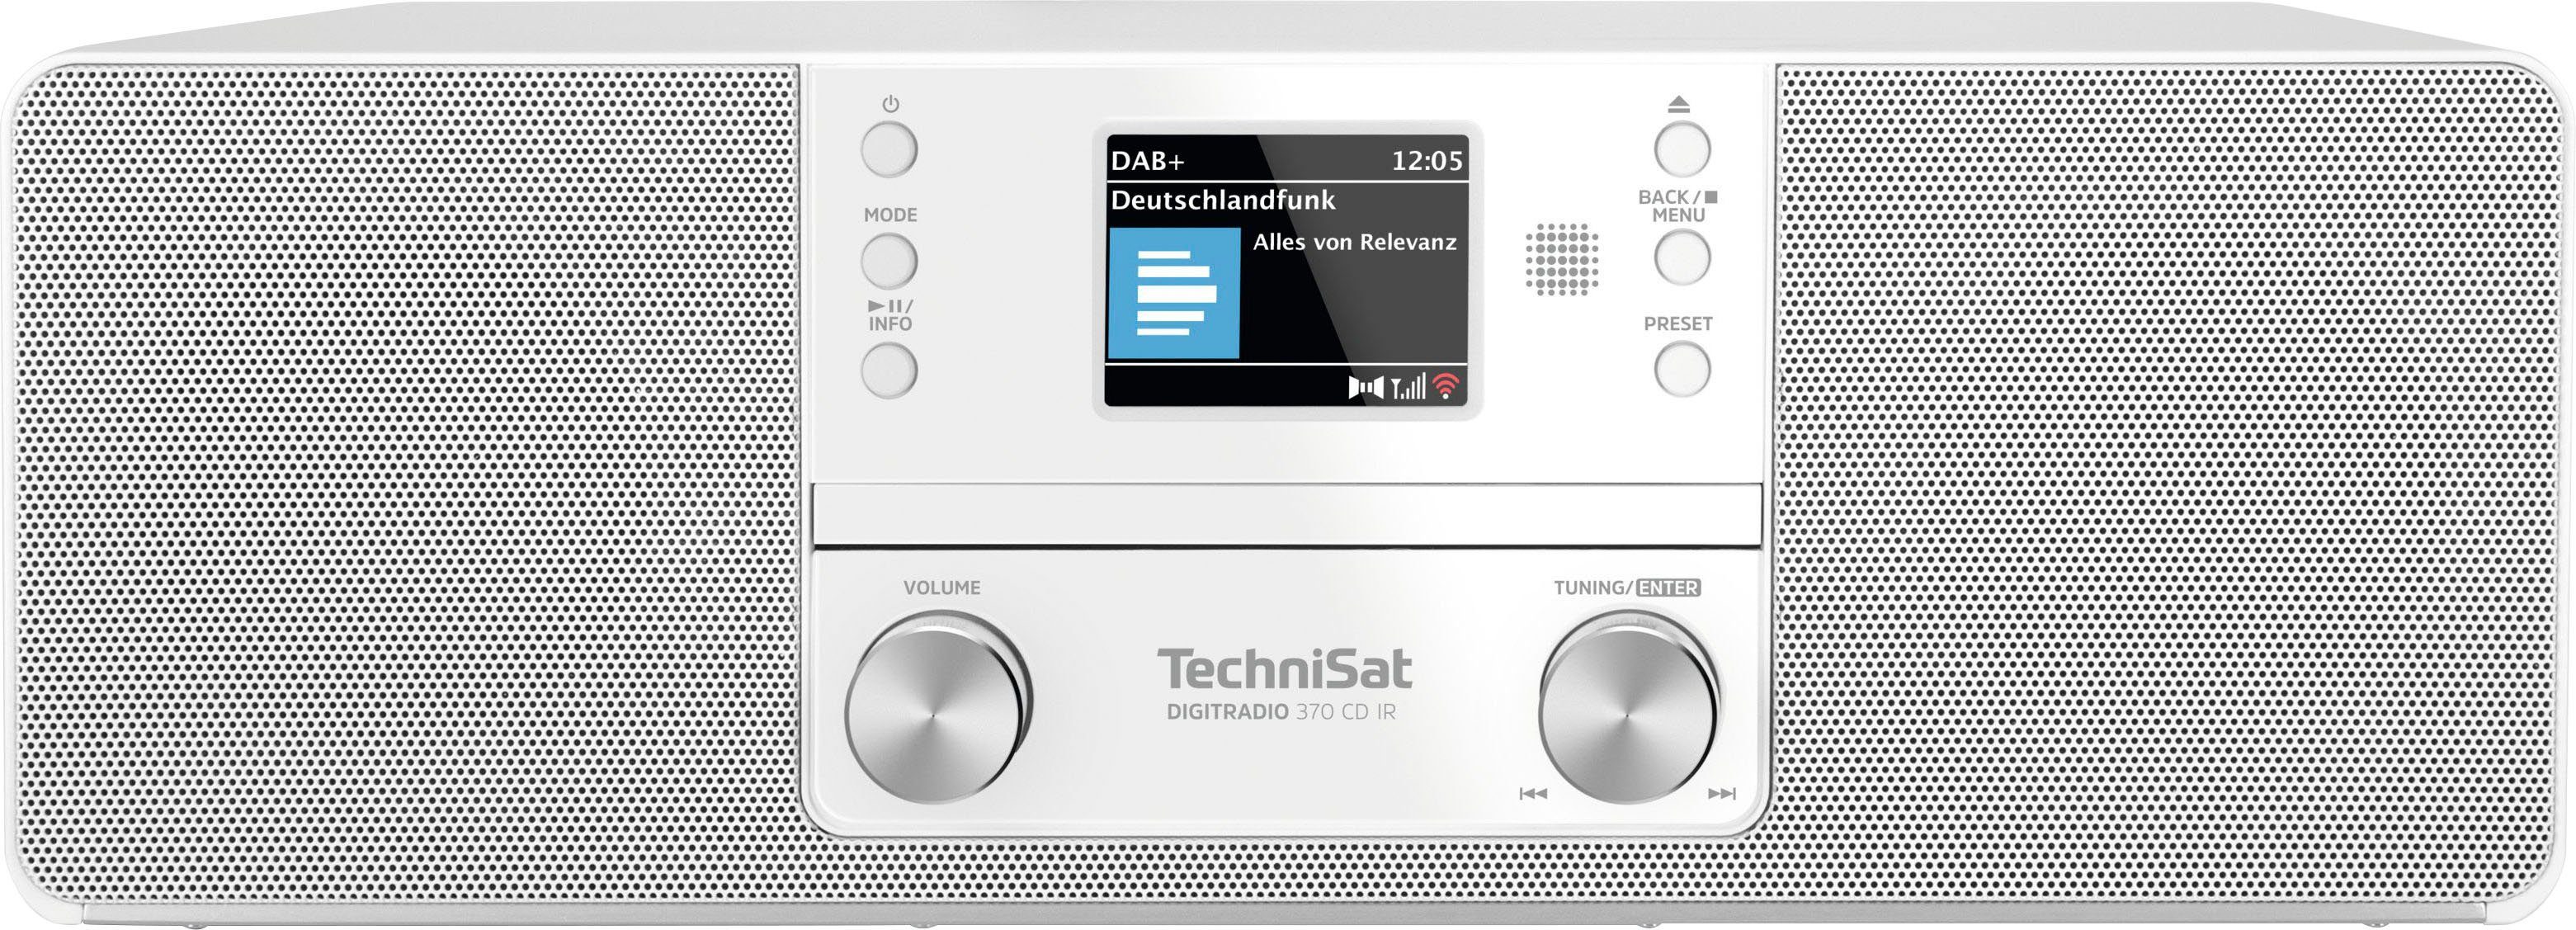 IR mit (DAB), weiß (Digitalradio W) (DAB) TechniSat CD 370 RDS, Digitalradio 10 DIGITRADIO UKW